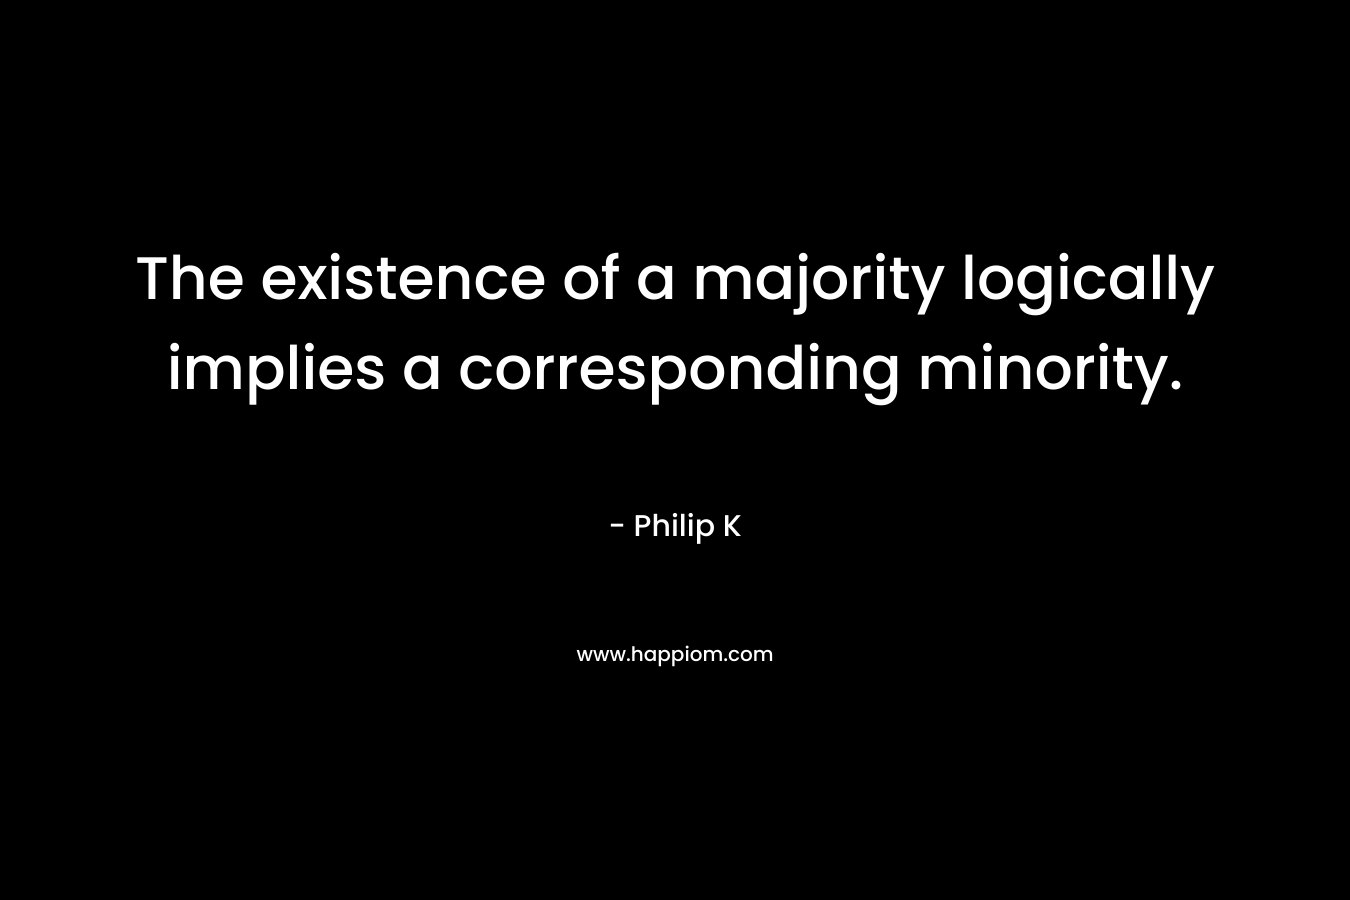 The existence of a majority logically implies a corresponding minority.